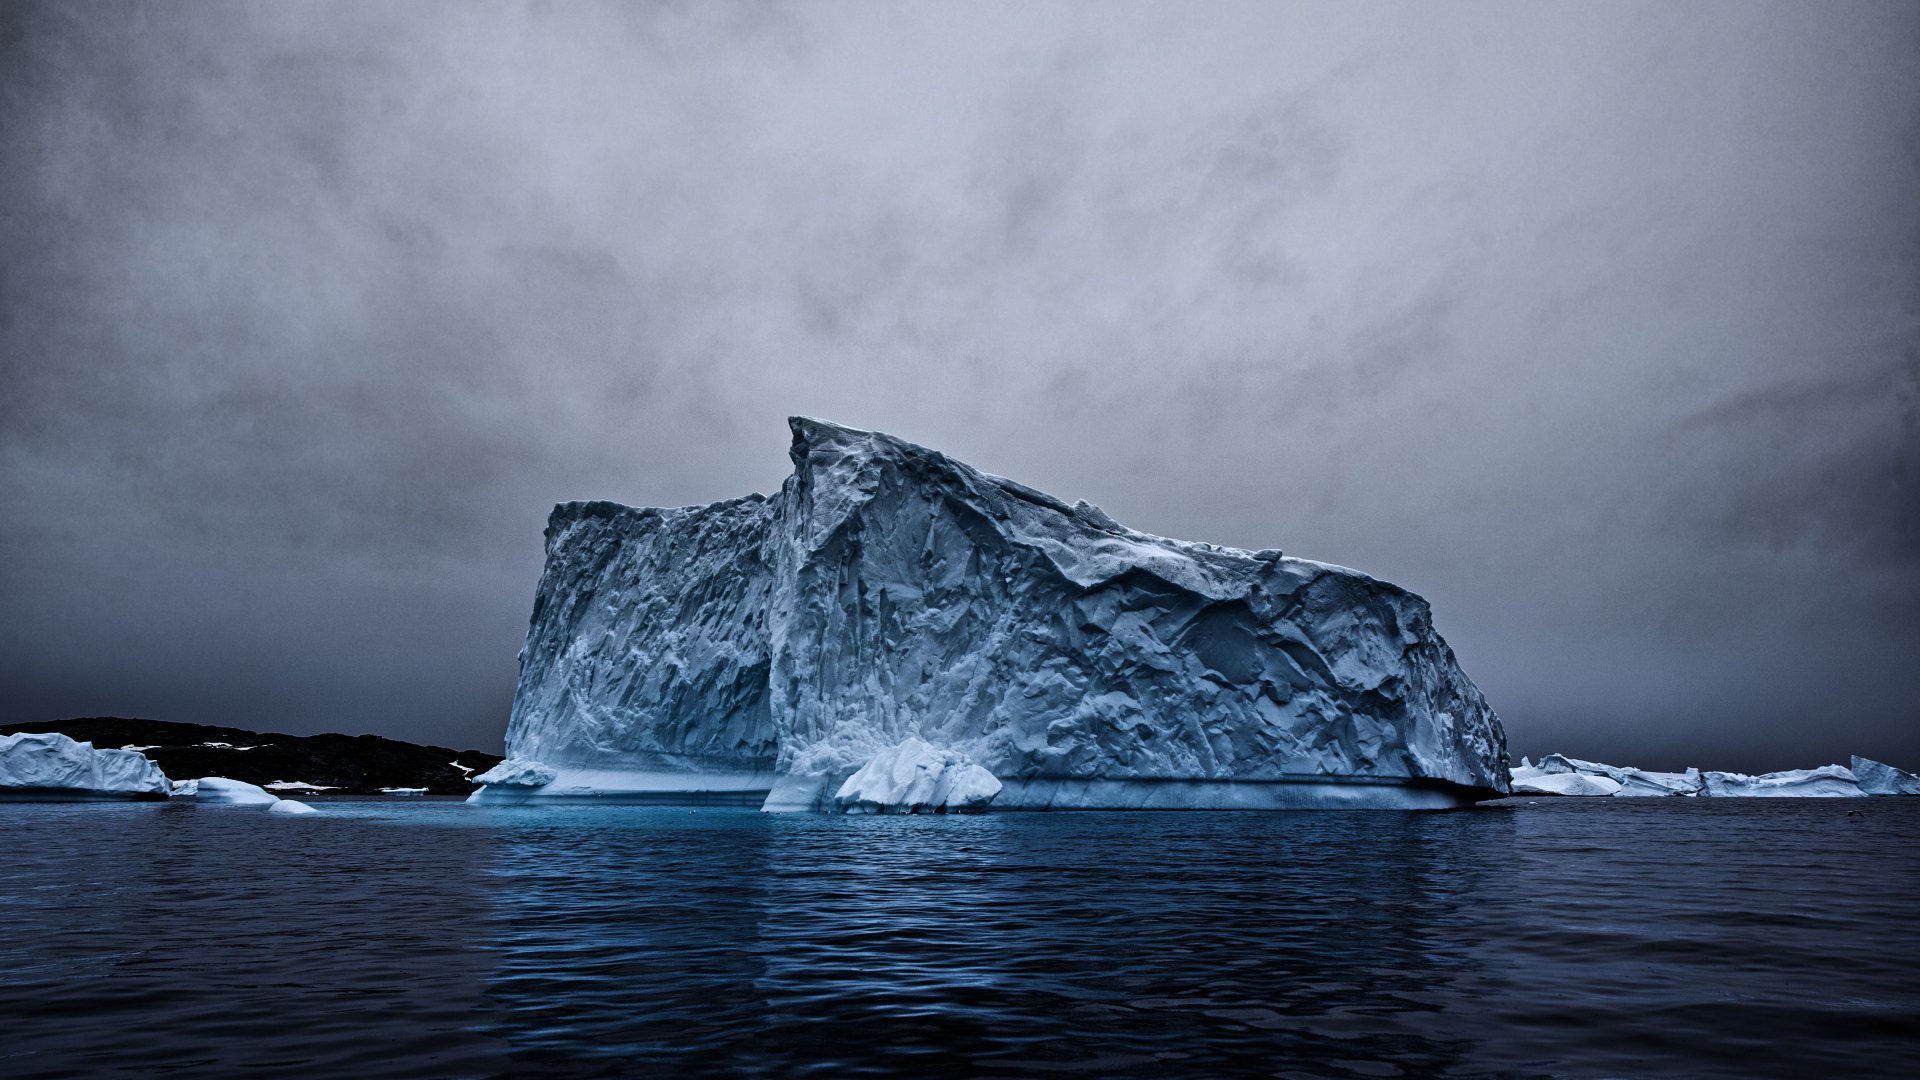 Beautiful Iceberg Wallpaper